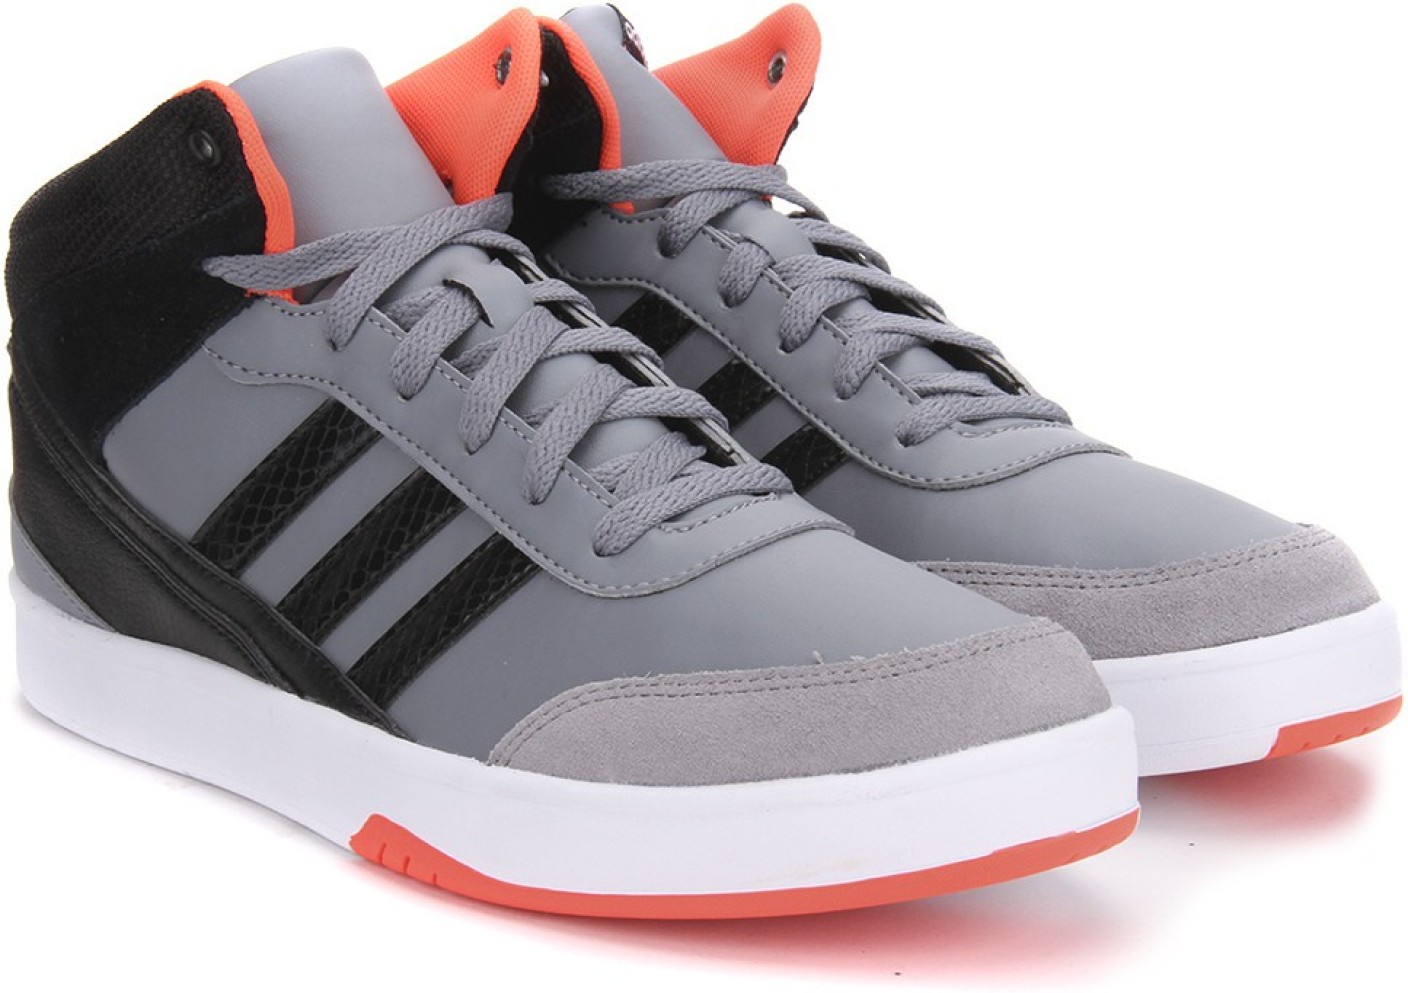 Adidas Neo PARK ST KFLIP MID Sneakers - Buy GREY/CBLACK/SOLRED Color Adidas Neo PARK ...1408 x 993